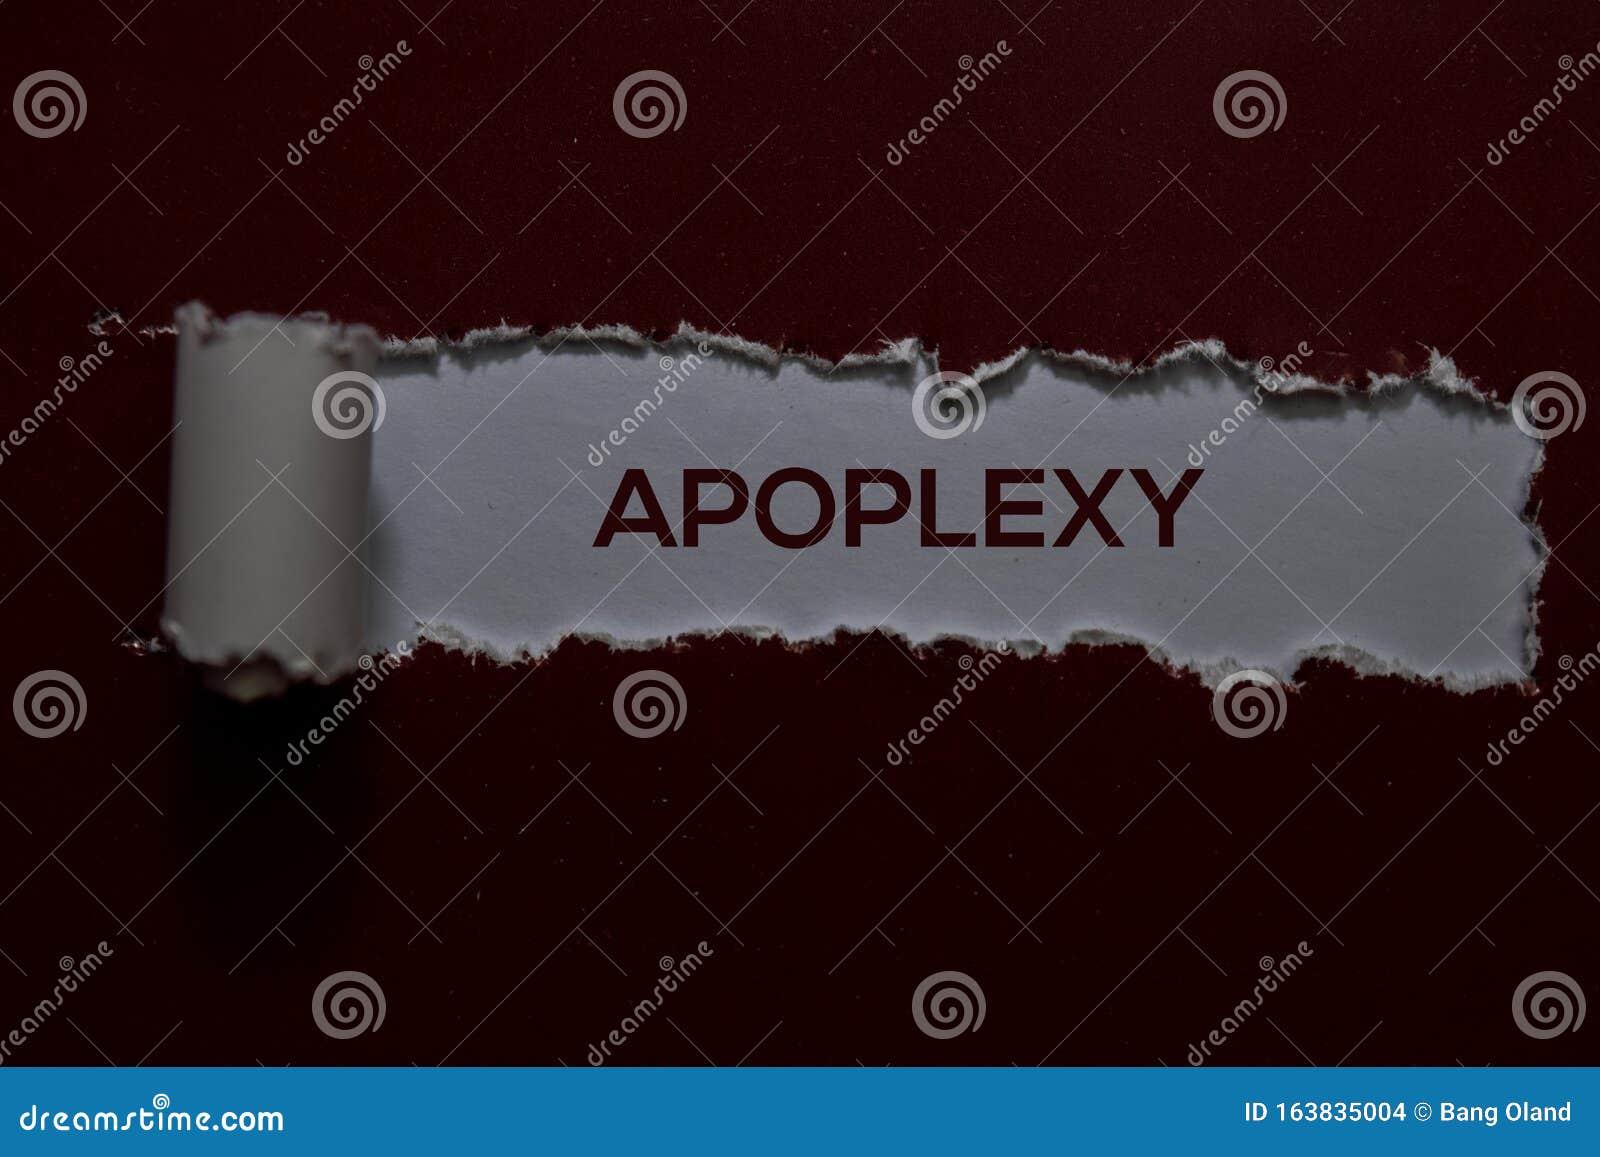 apoplexy text written in torn paper